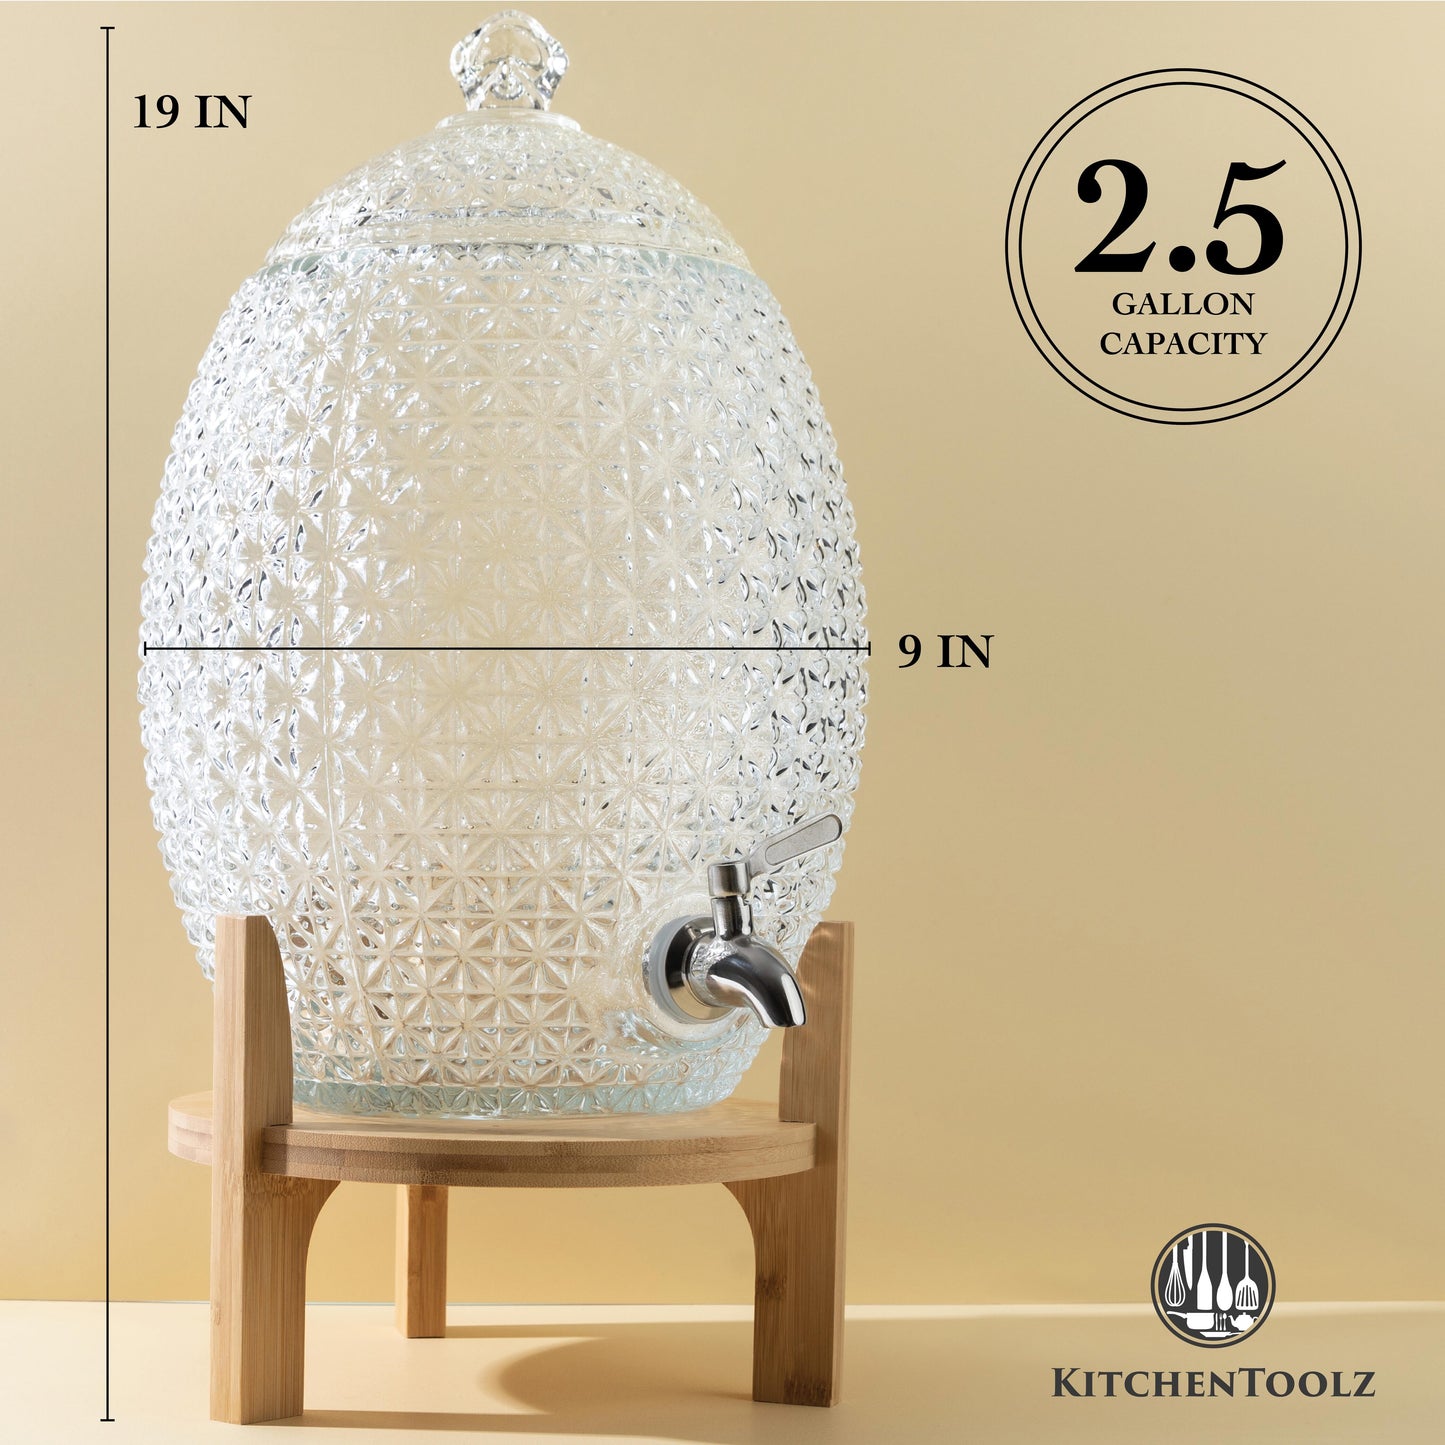 2.5 Gallon Glass Dispenser Bamboo Stand- Faberge Egg